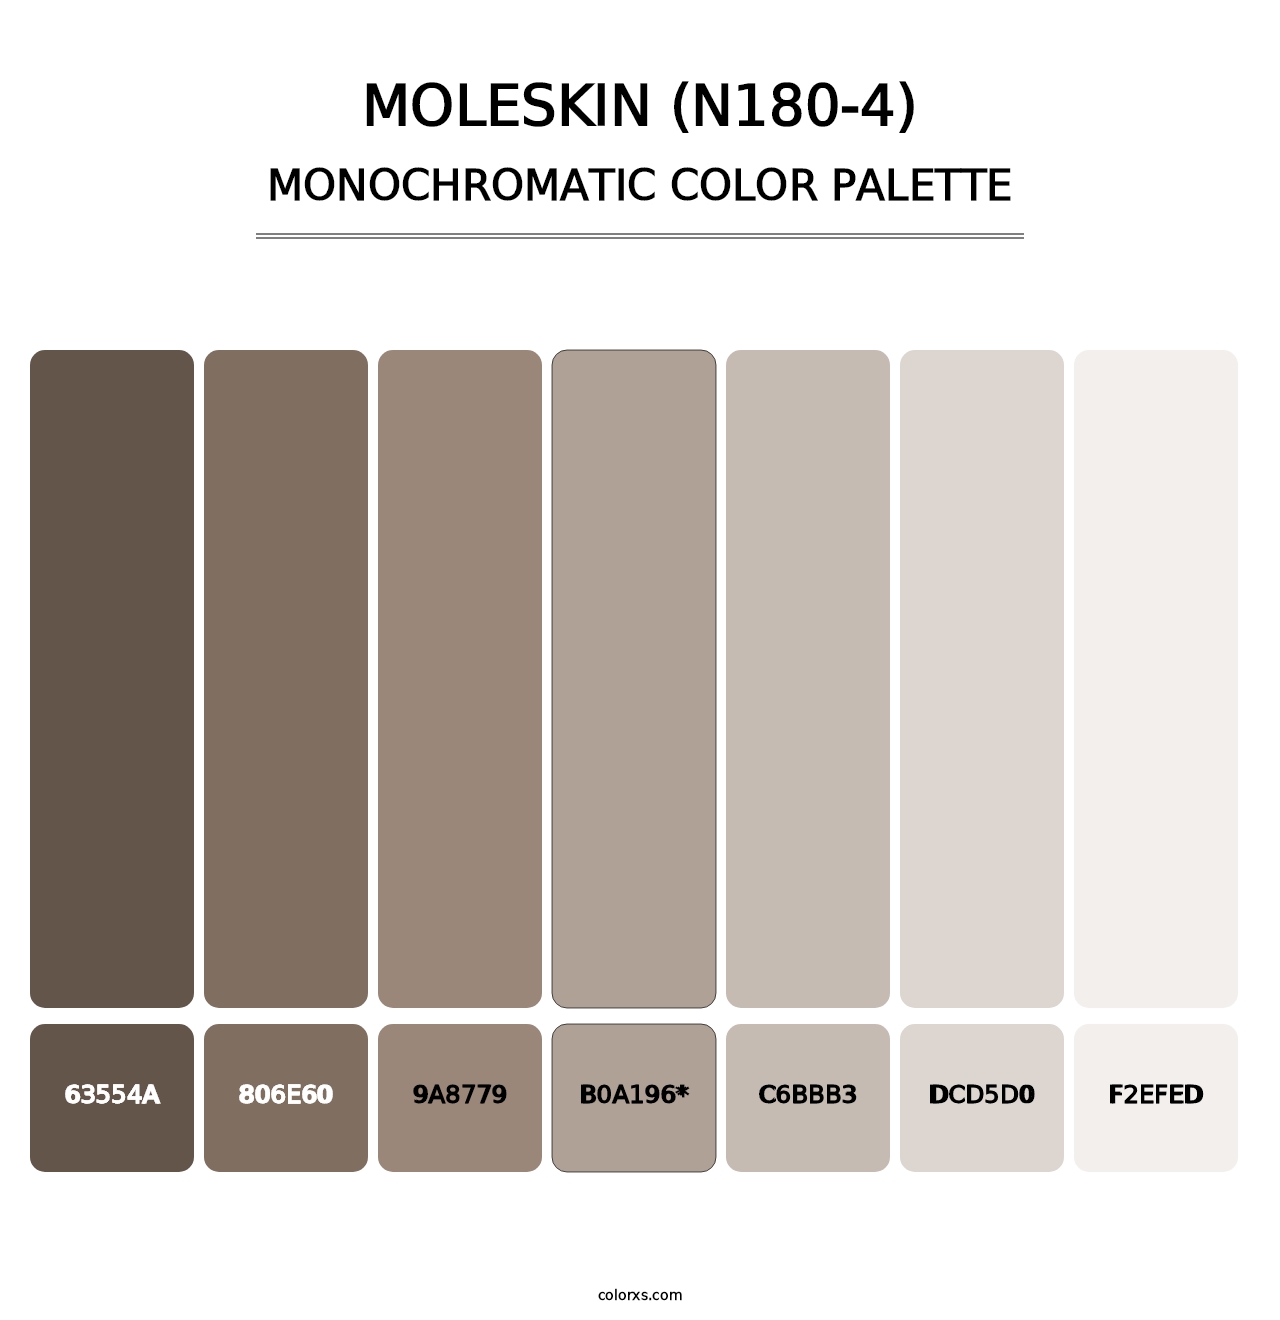 Moleskin (N180-4) - Monochromatic Color Palette